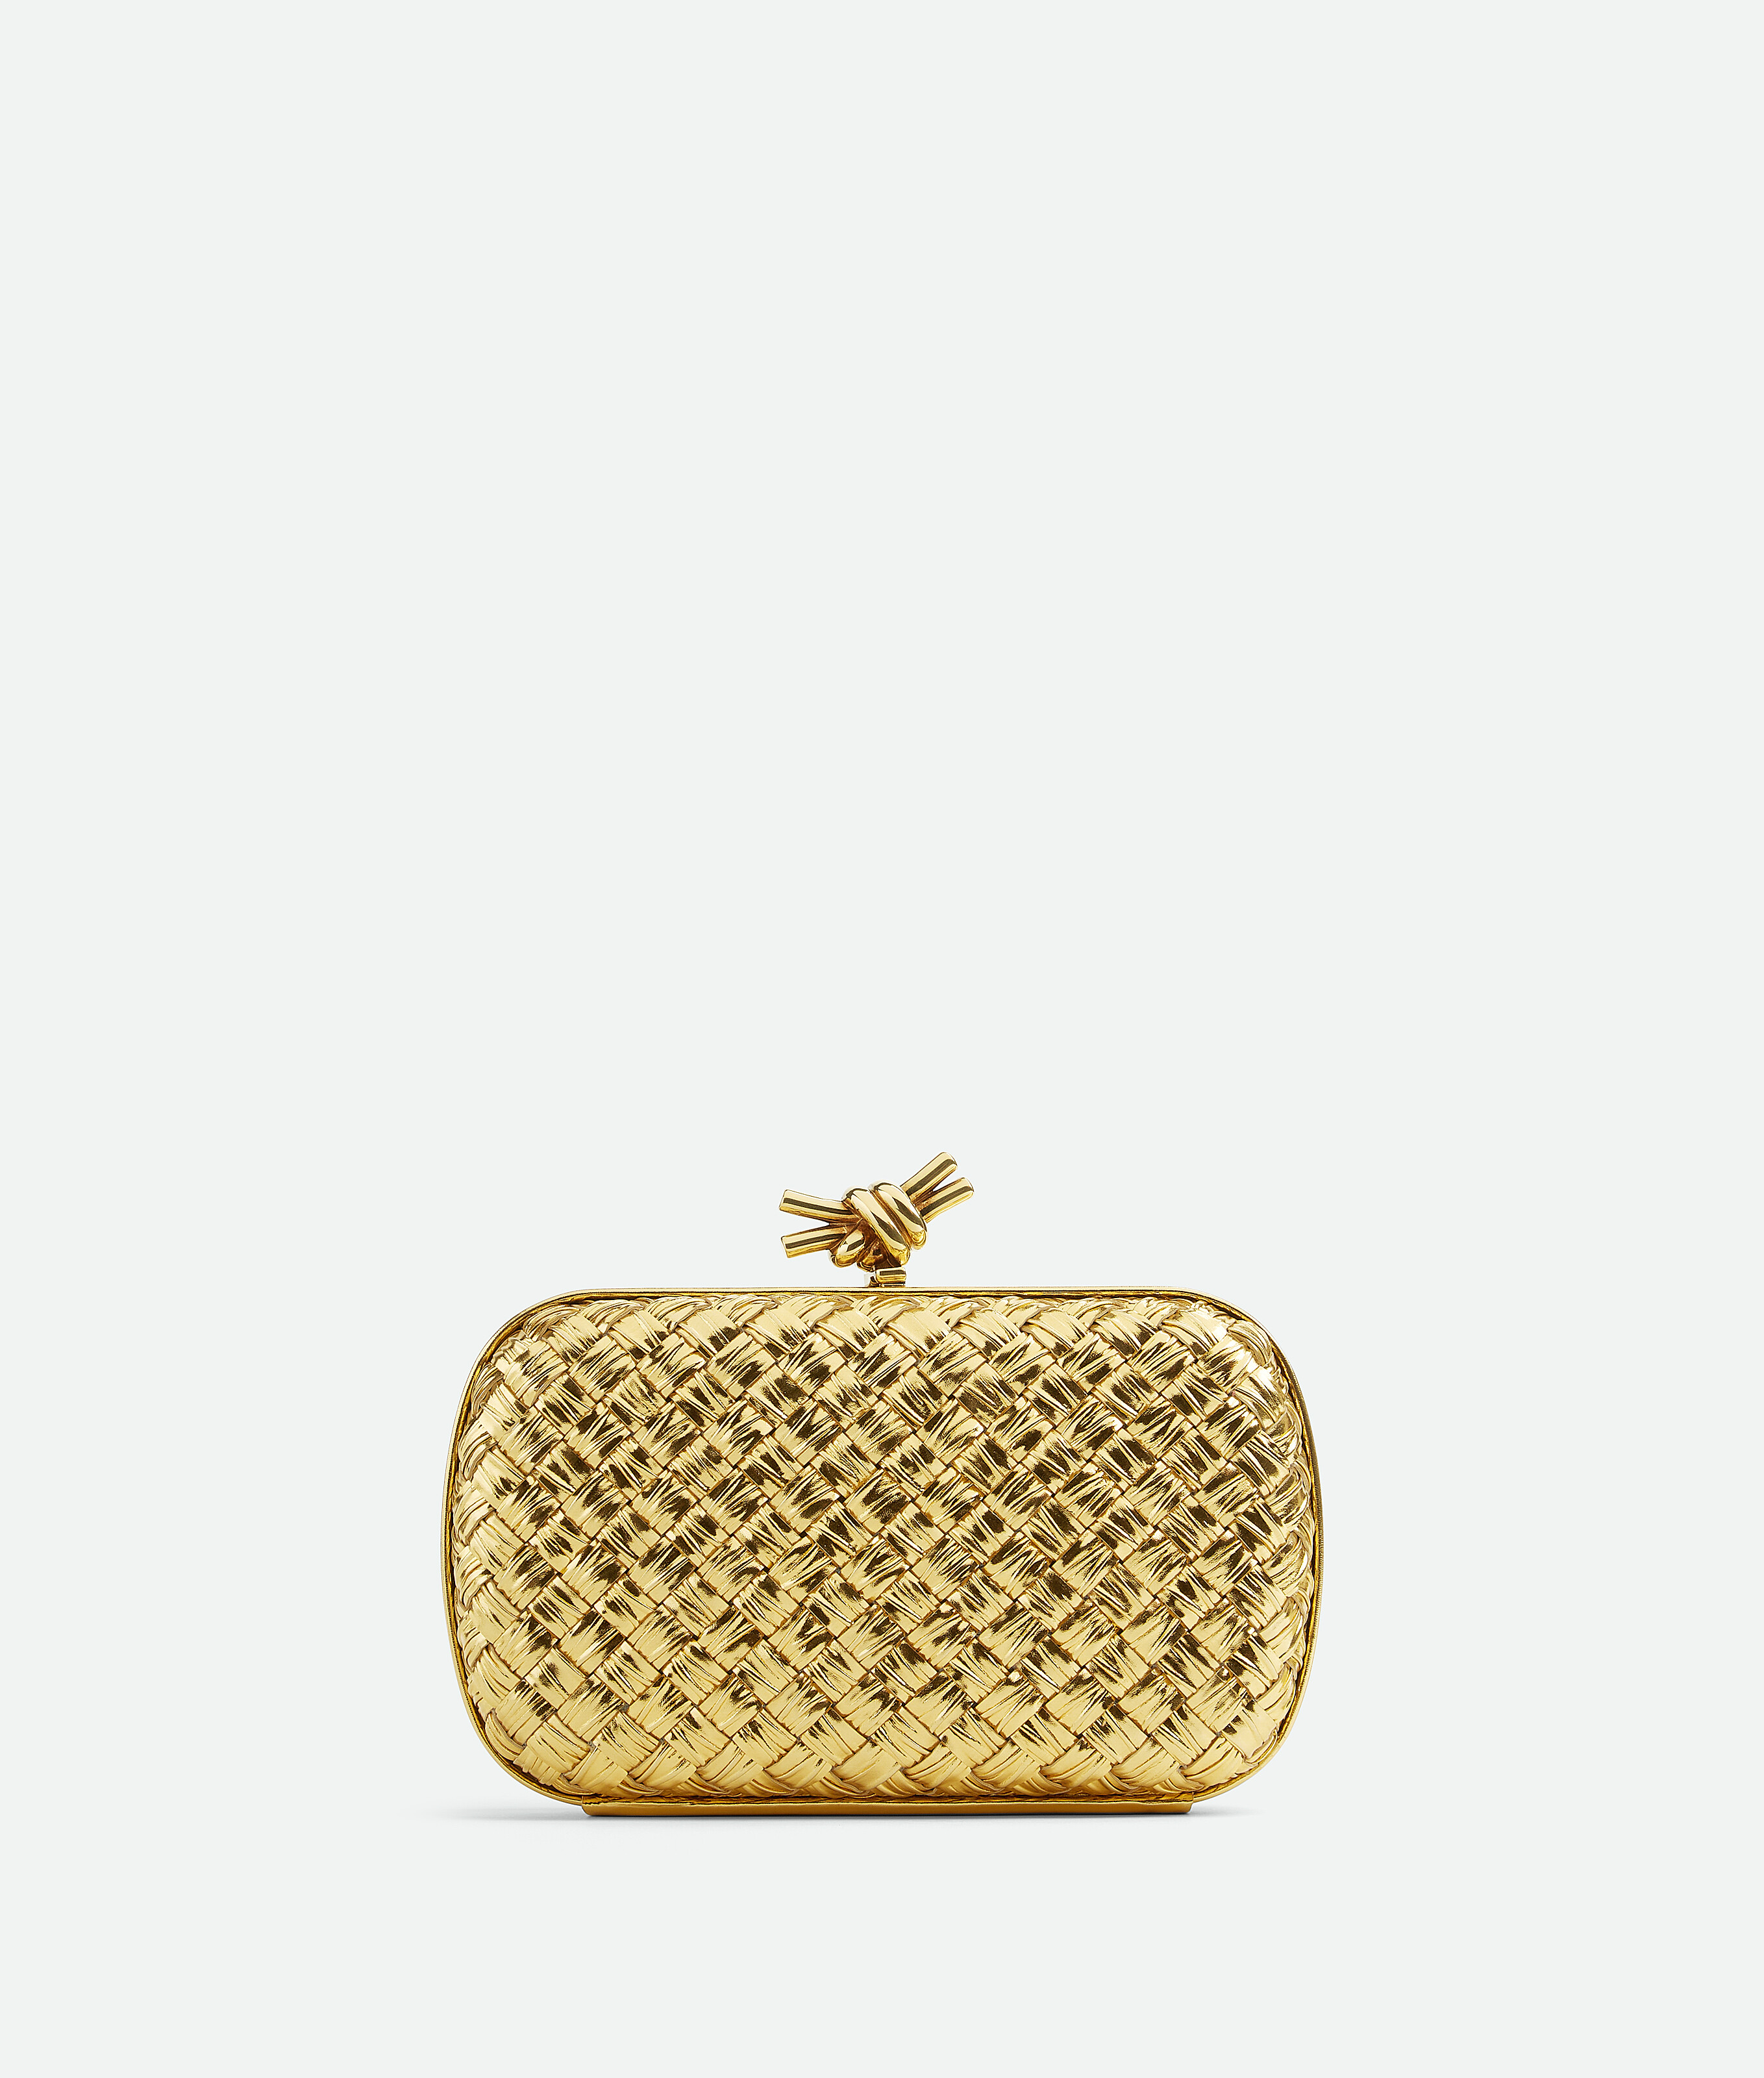 Bottega Veneta® Knot in Gold. Shop online now.